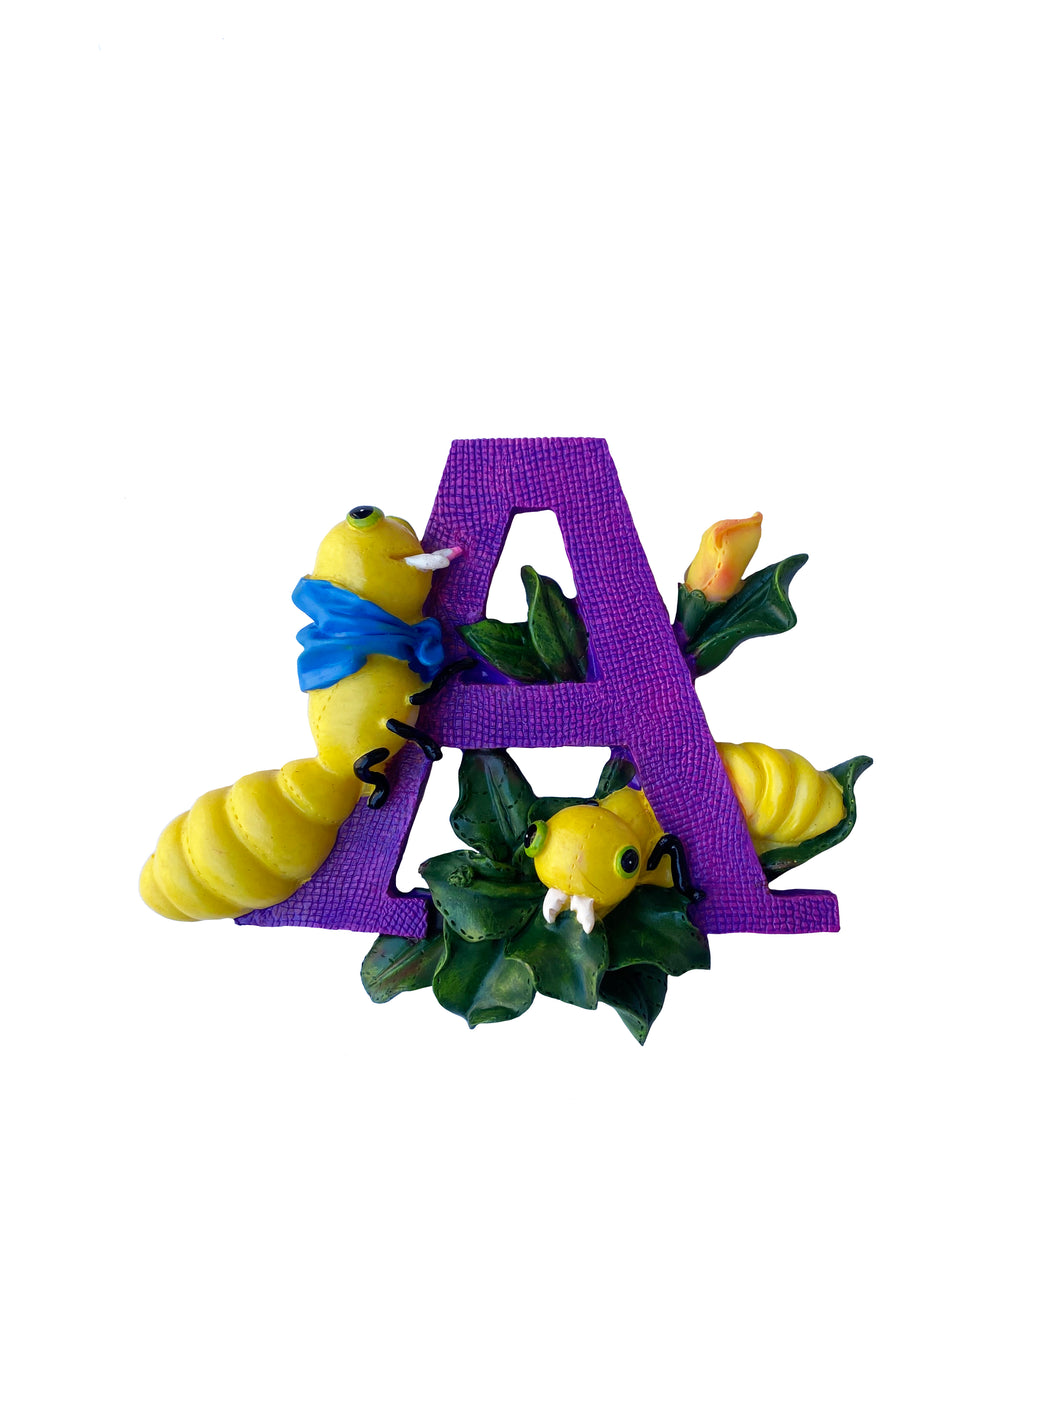 Alphabet Letter Magnets